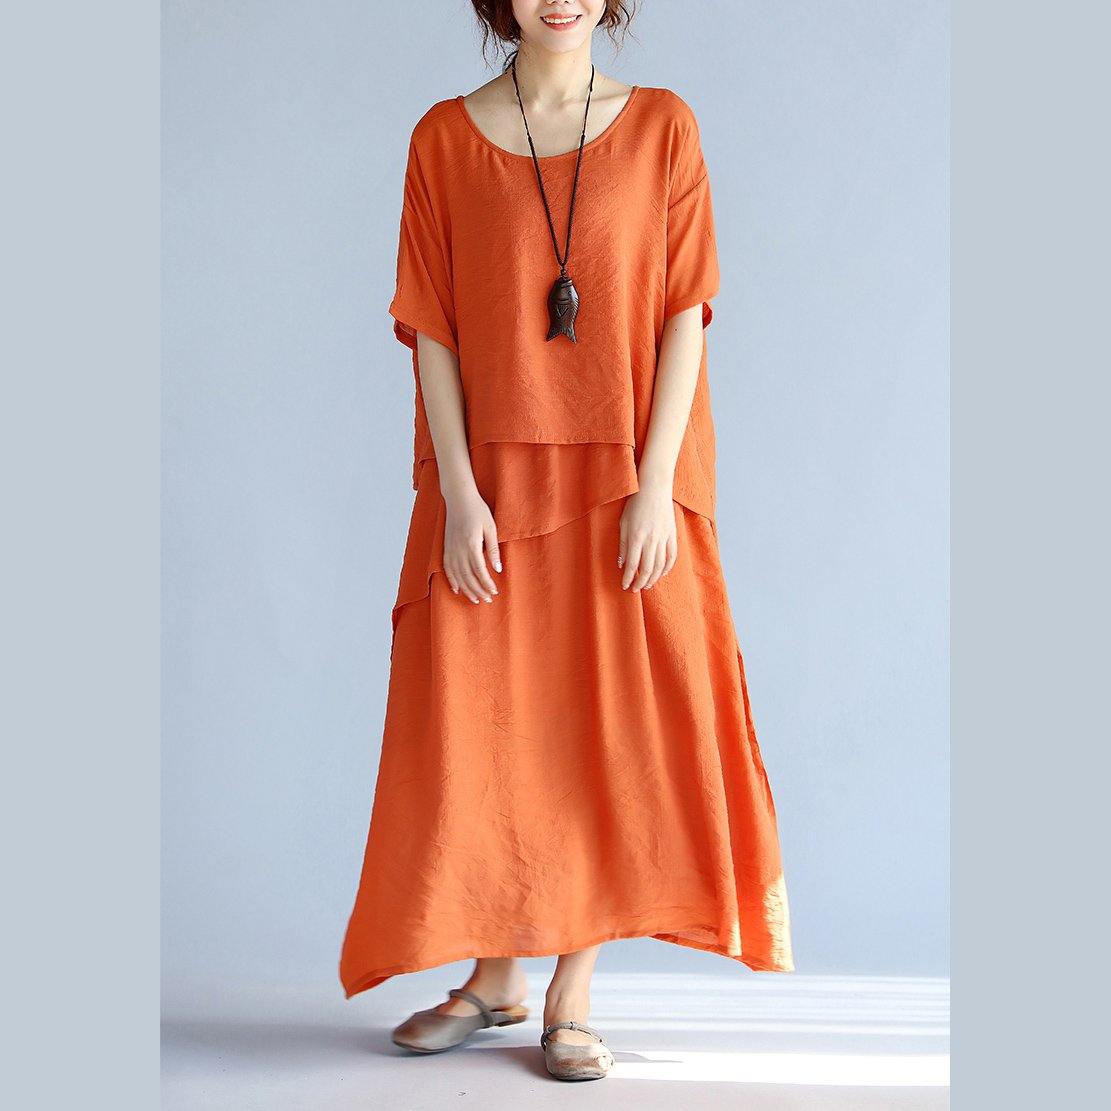 New orange long linen dresses plus size clothing layered cotton dresses New short sleeve linen cotton dress - Omychic